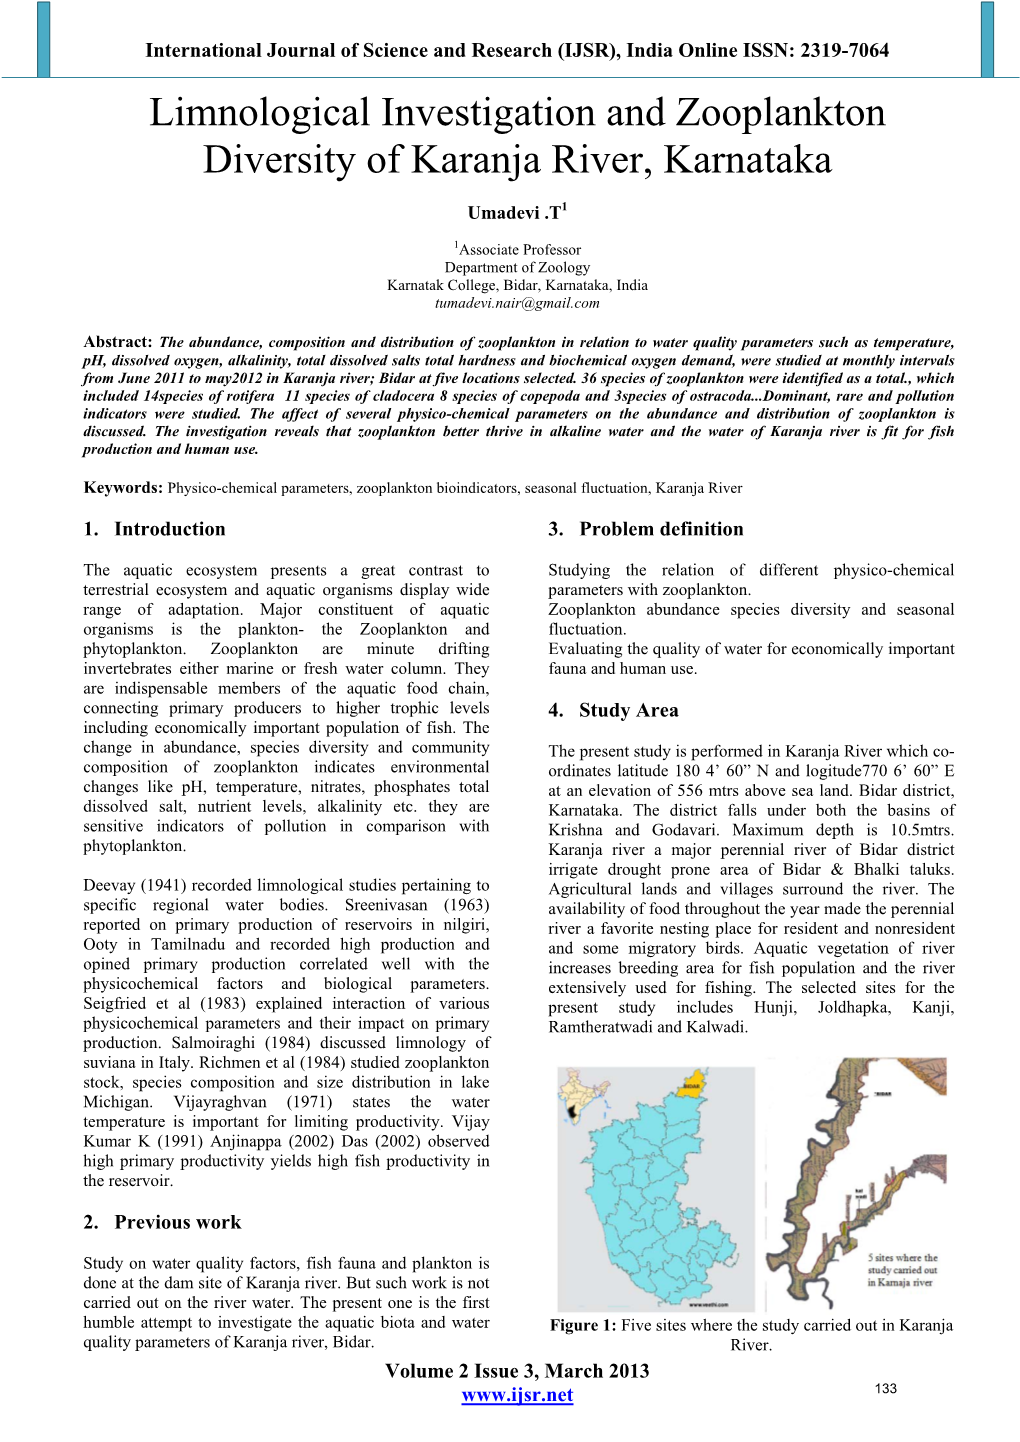 Limnological Investigation and Zooplankton Diversity of Karanja River, Karnataka